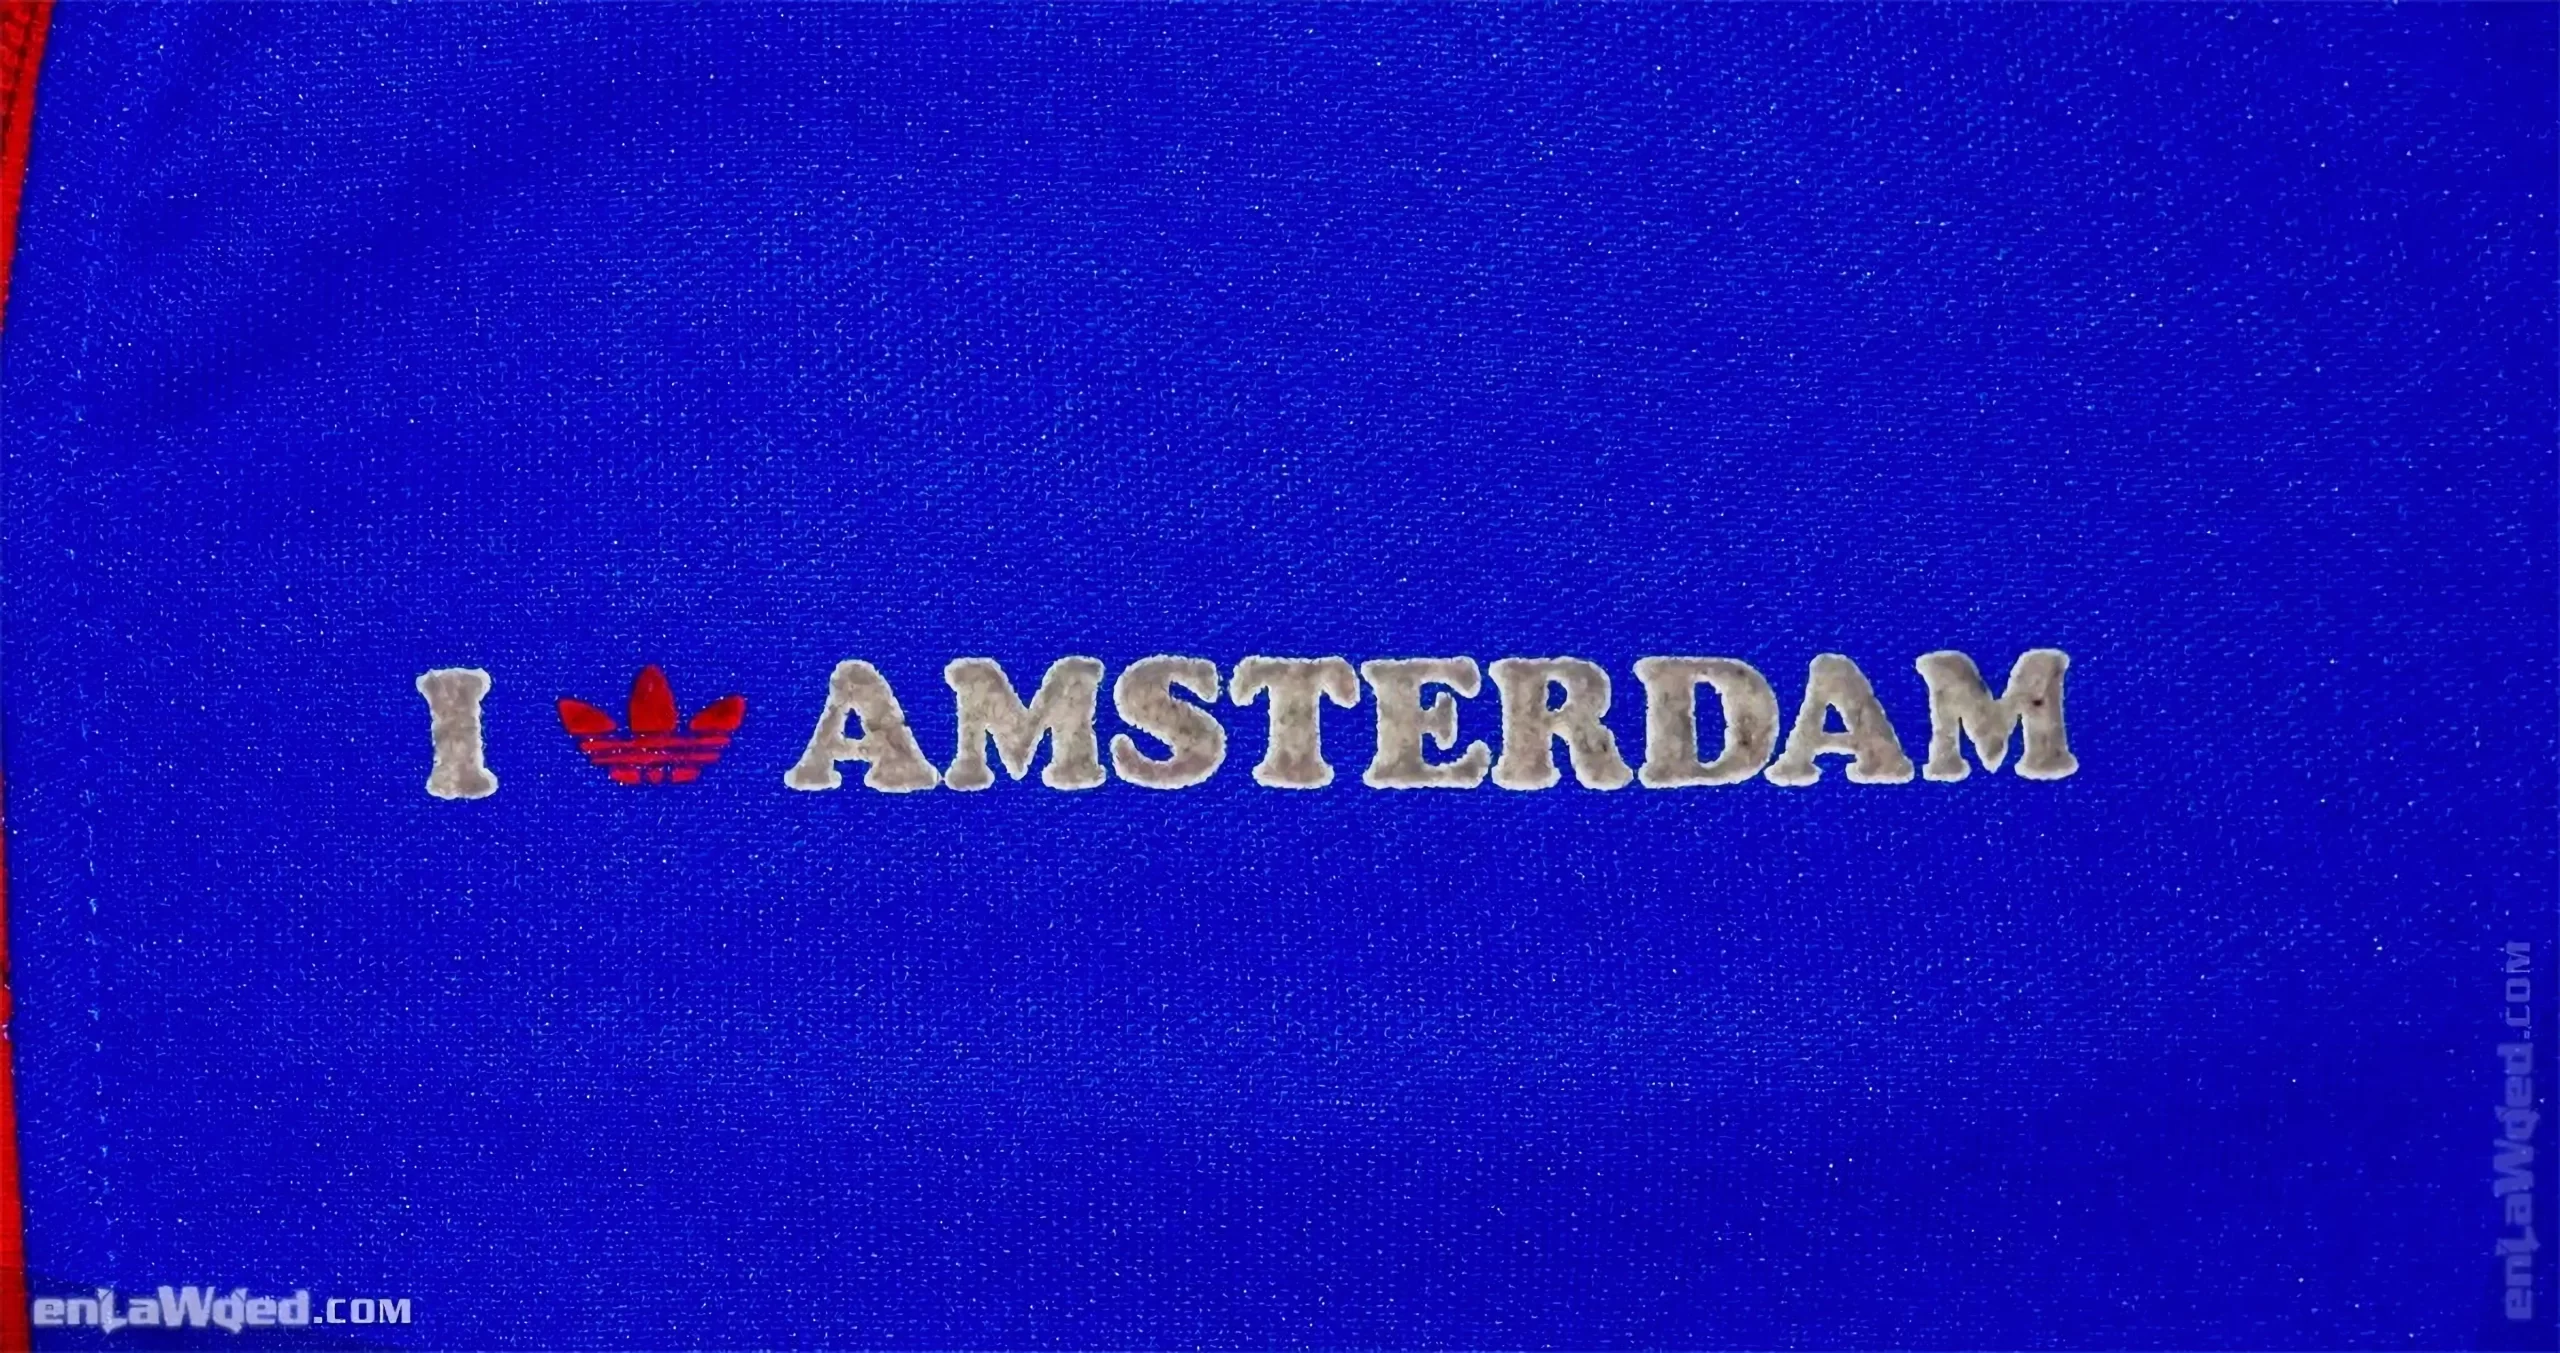 Men’s 2006 Amsterdam Track Top by Adidas Originals: Thrilling (EnLawded.com file #lmchk90441ip2y122306kg9st)